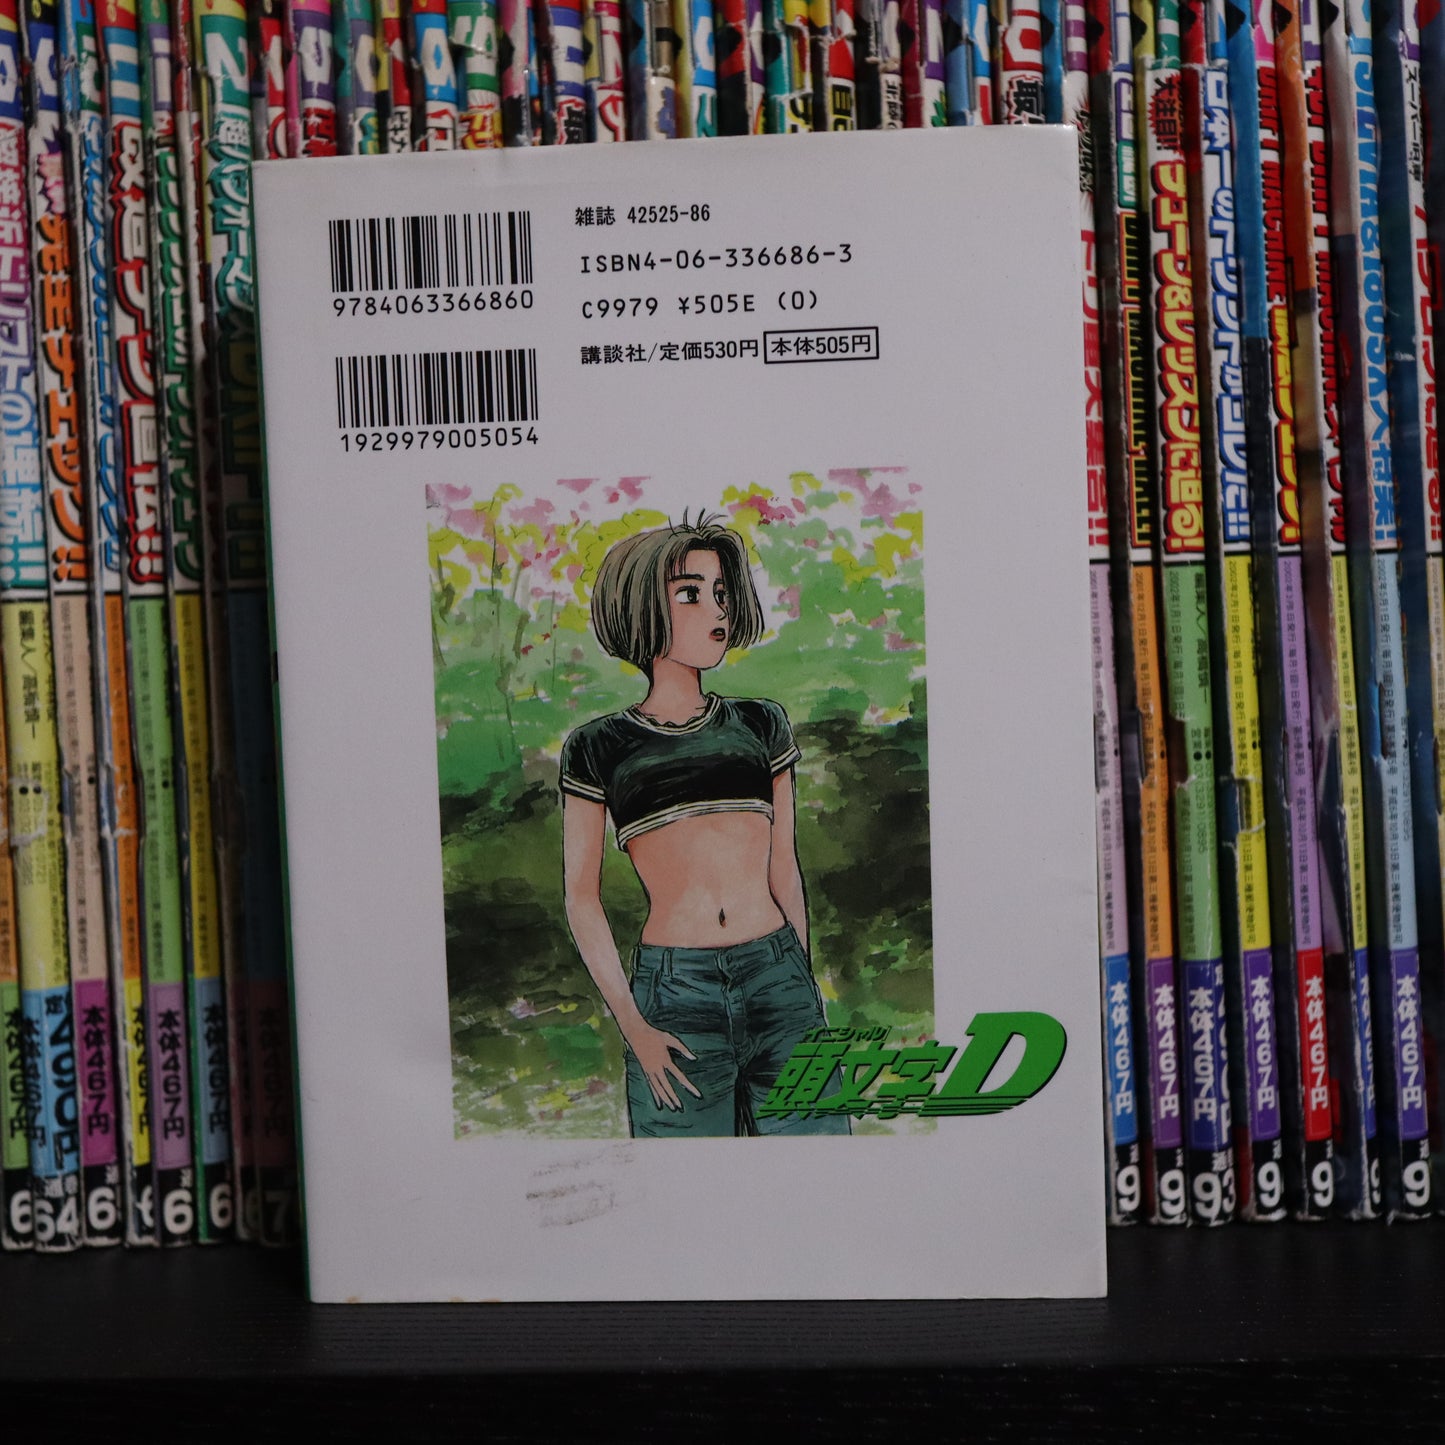 Initial D Manga Volume 8